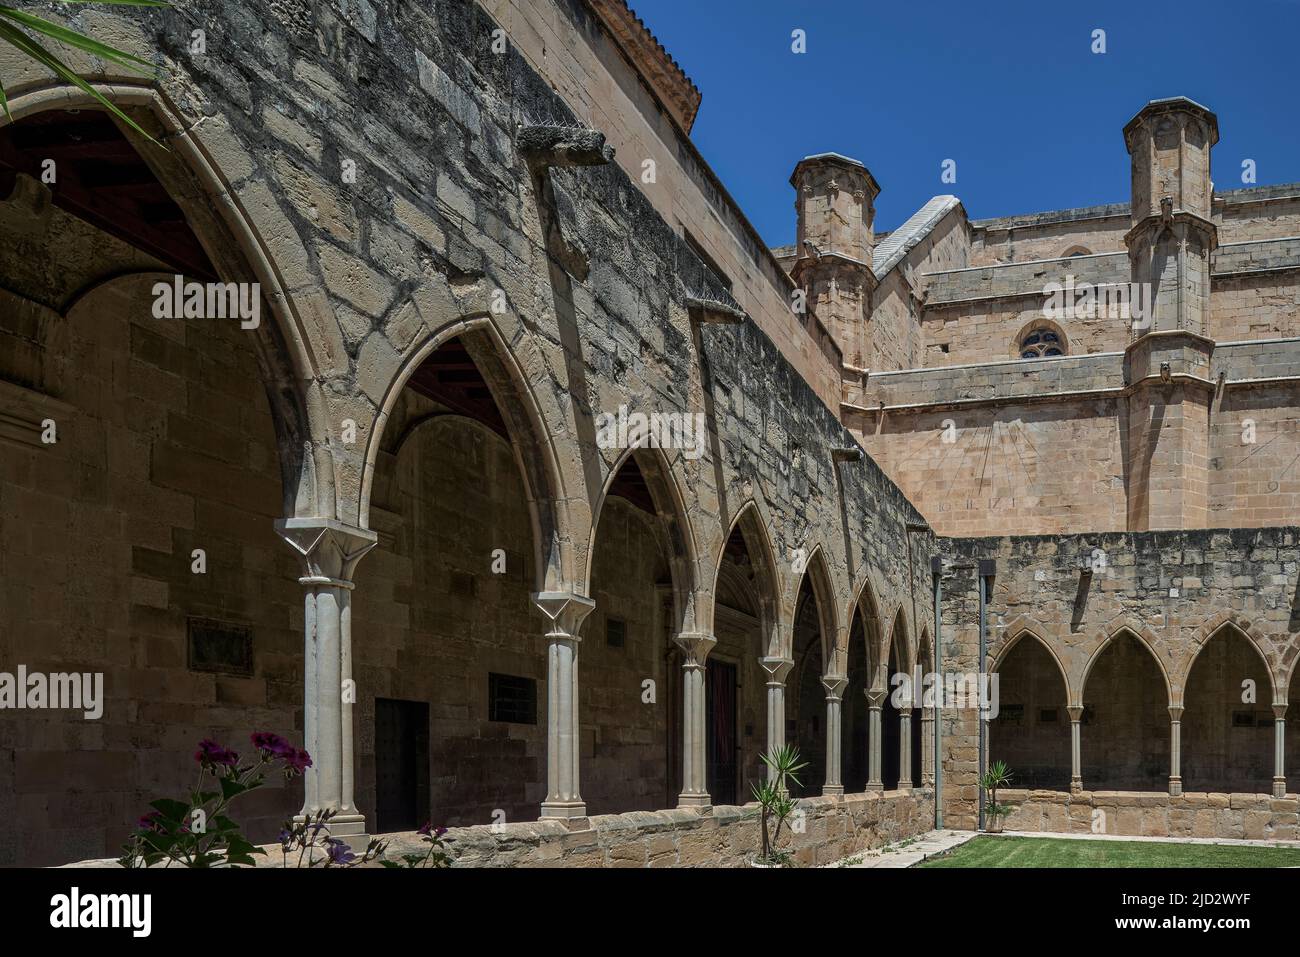 Catalan gothic cloister interior of the 14th century cathedral basilica of Santa María de Tortosa, Tarragona province, Catalonia, Spain, Europe Stock Photo